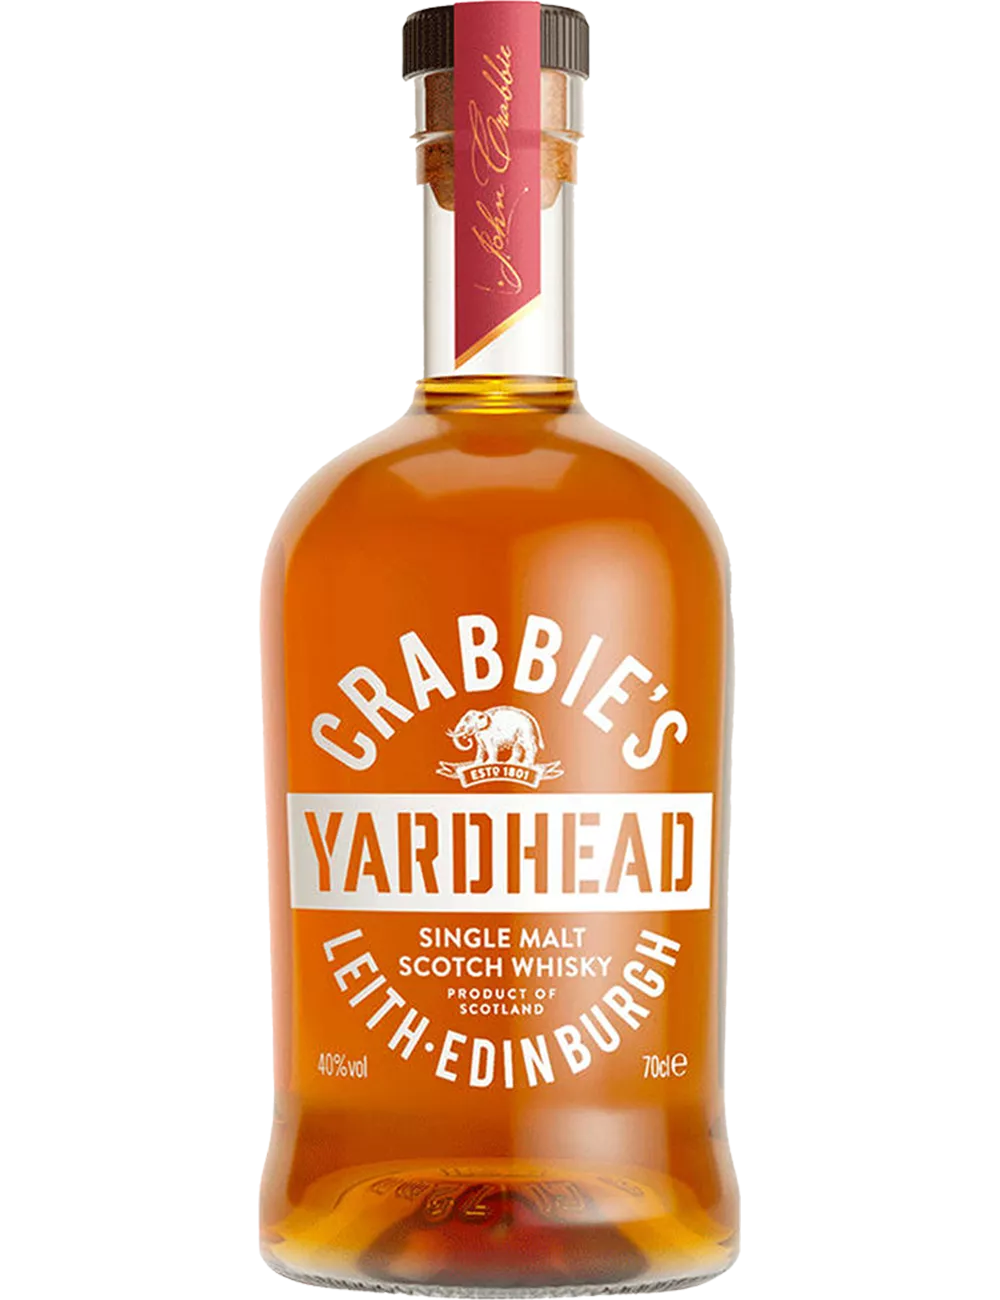 Crabbie - Yardhead - Whisky